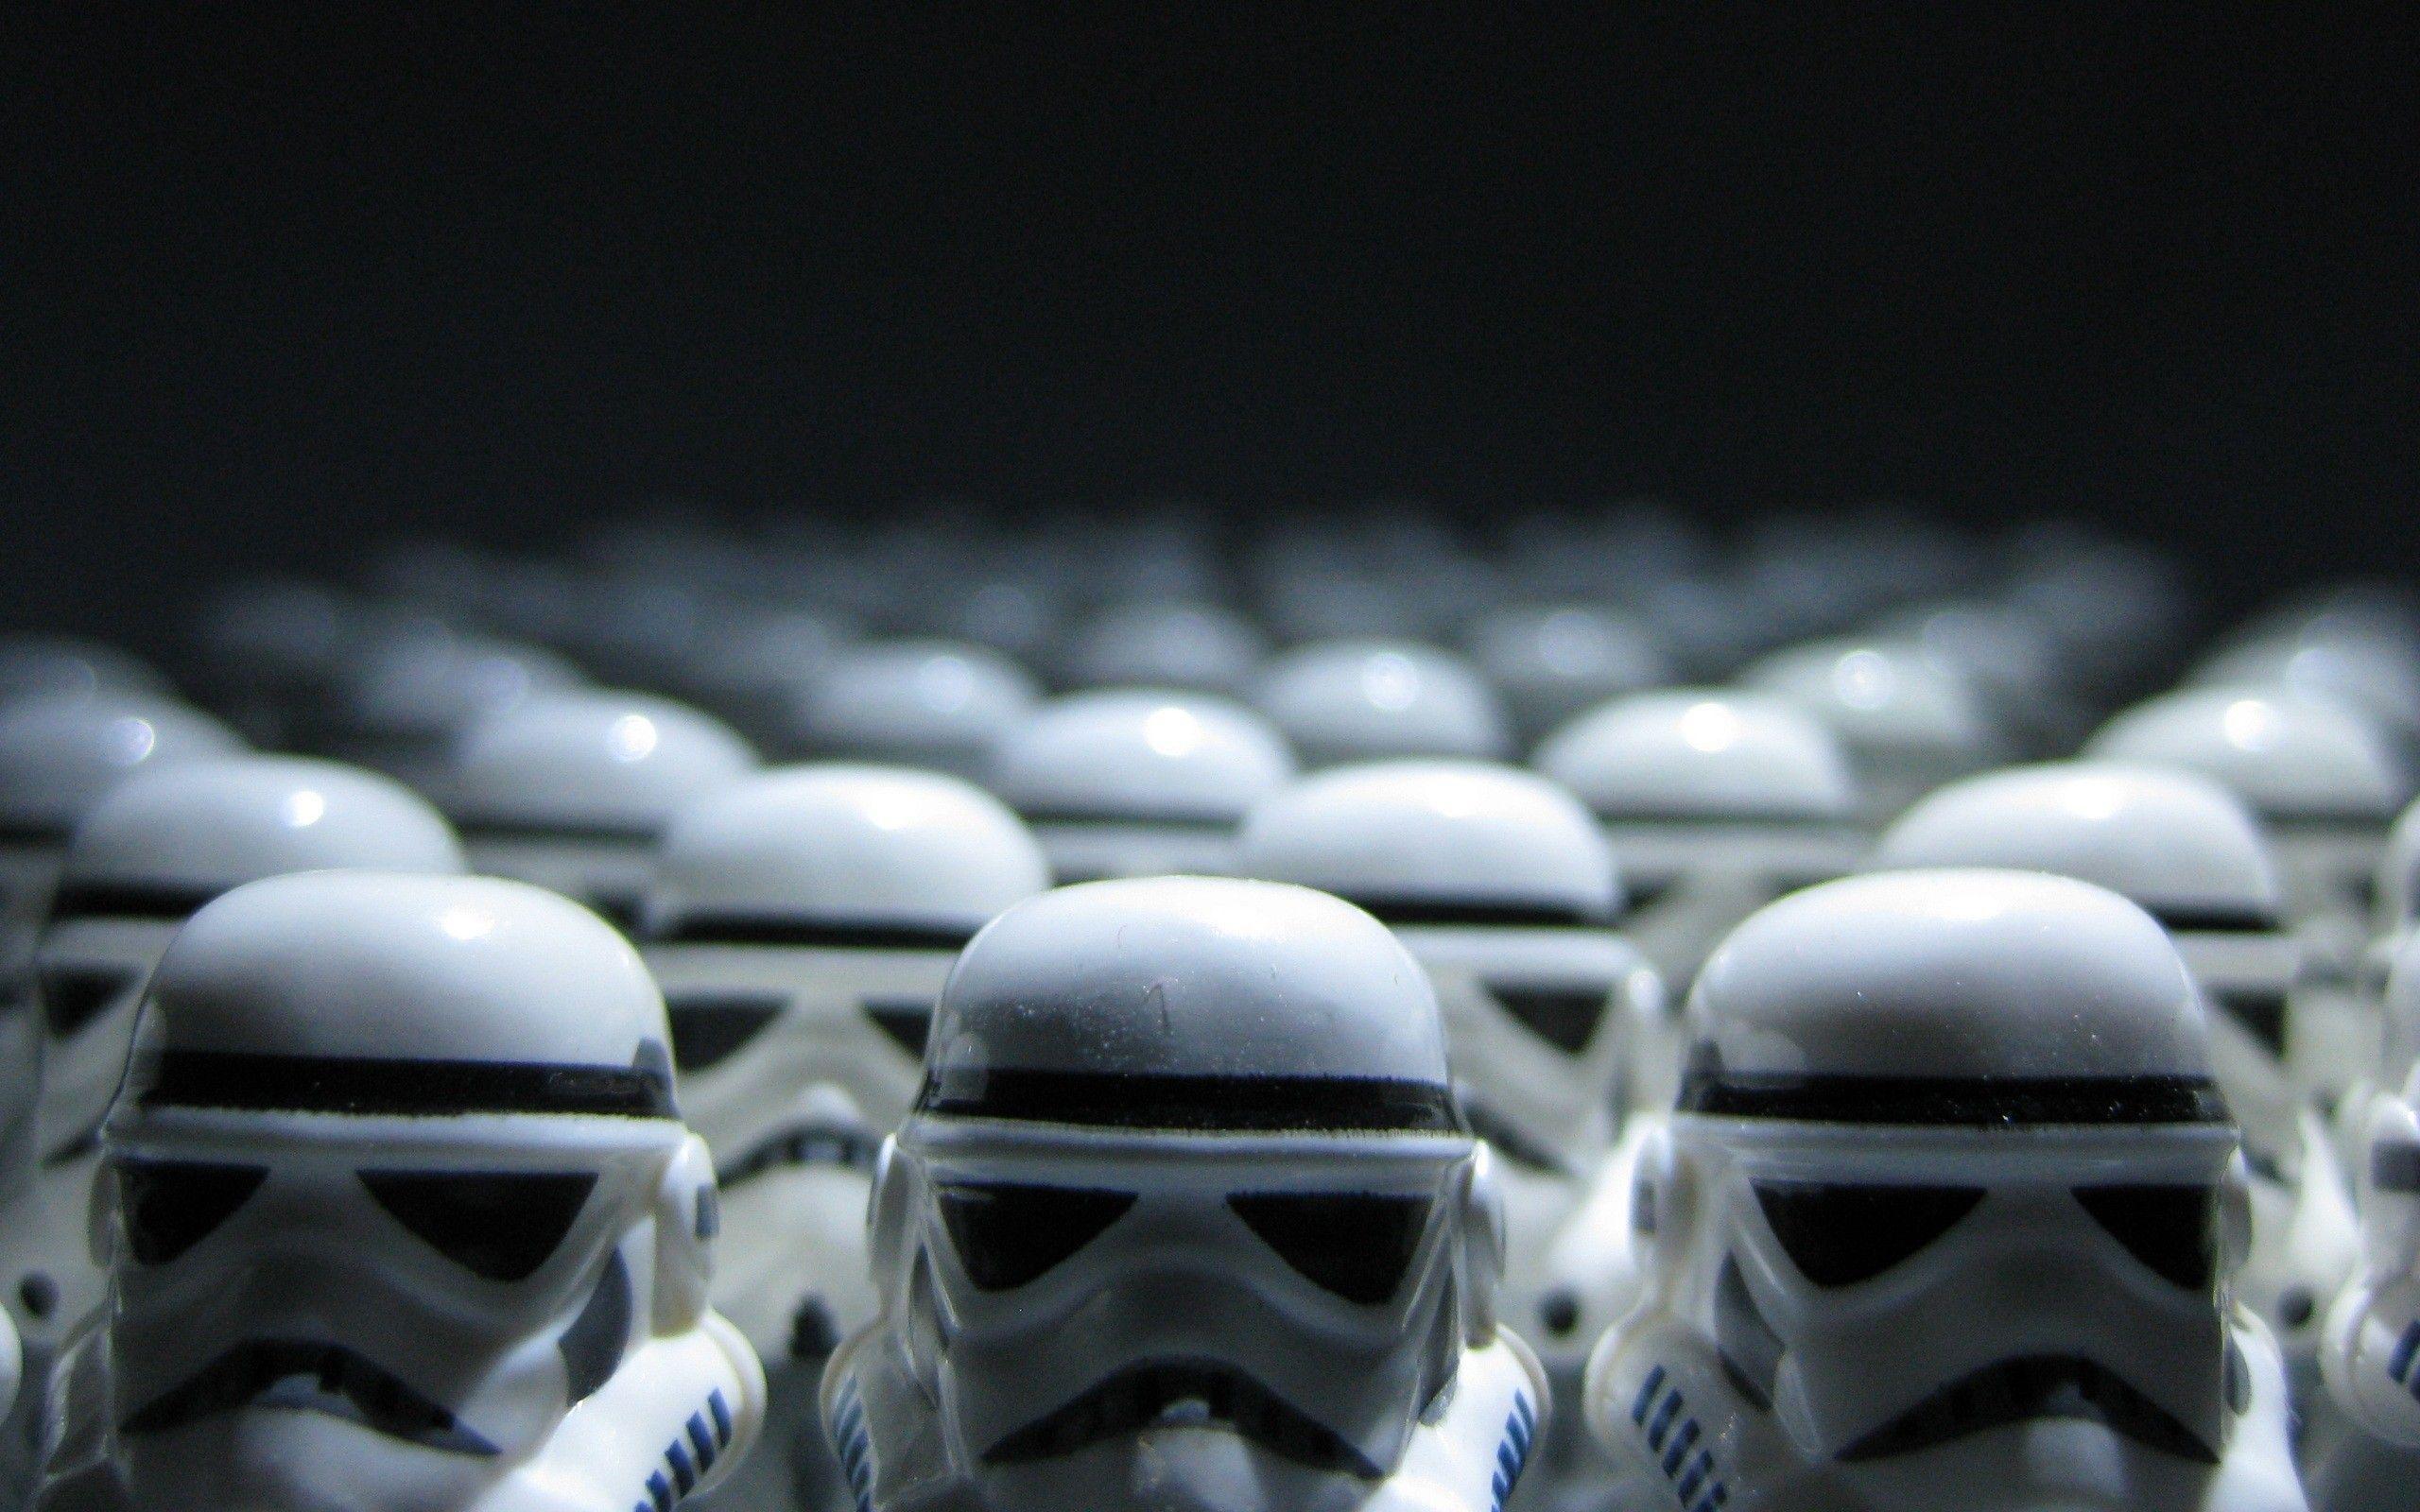 Star Wars Lego wallpaper